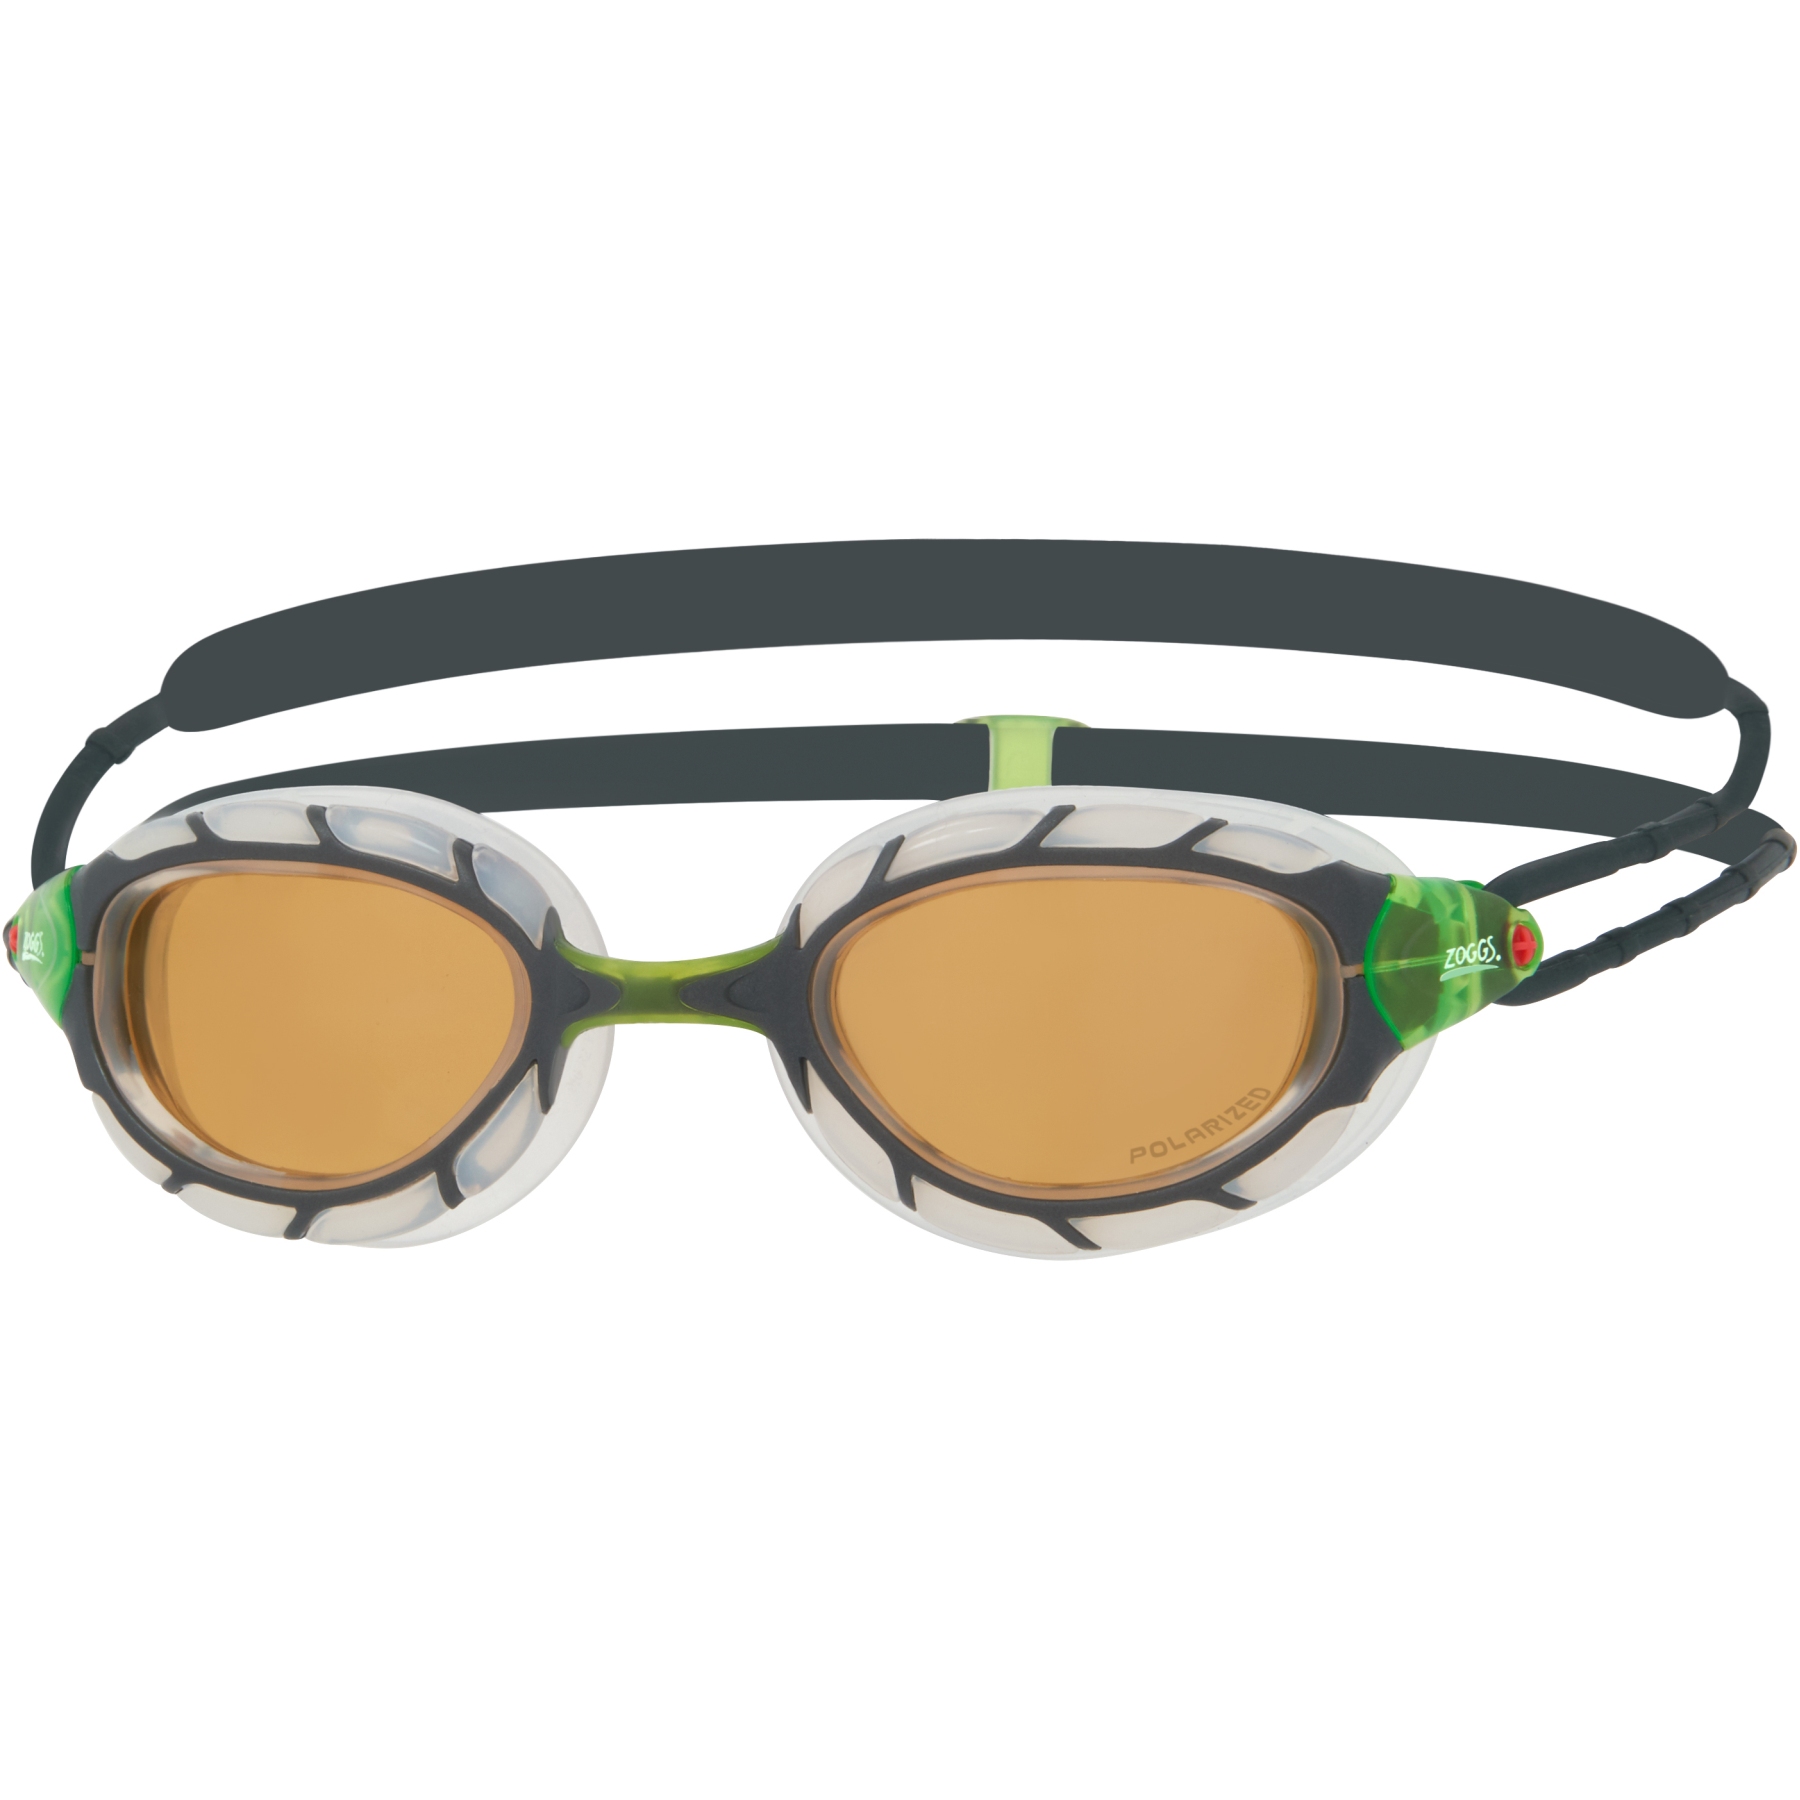 Picture of Zoggs Predator Swimming Goggles - Polarized Ultra Copper Lenses - Small Fit - Grey/Clear